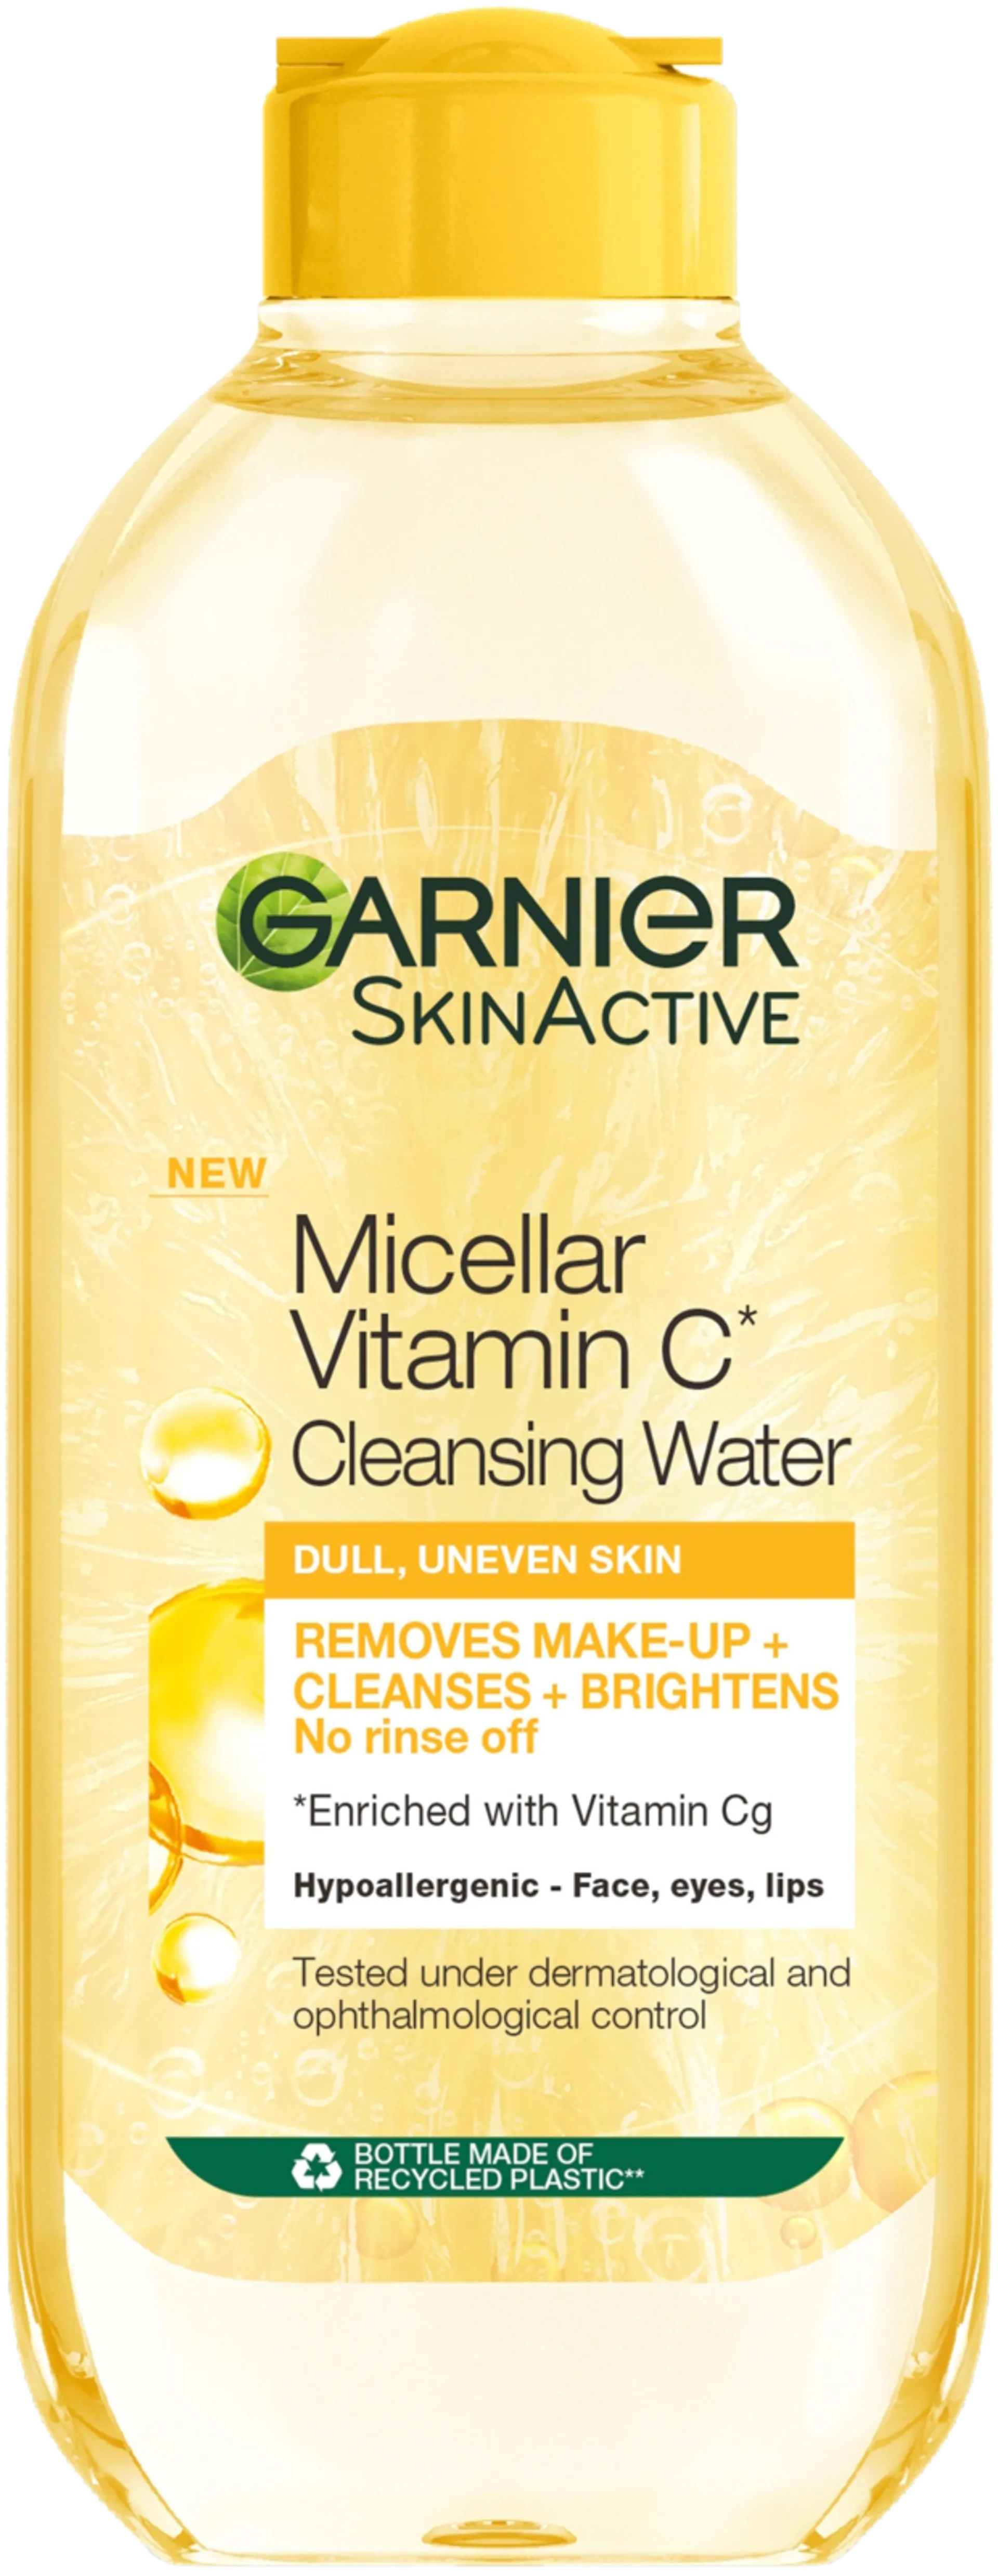 Garnier SkinActive Micellar Vitamin C Cleansing Water puhdistusvesi 400 ml - 1